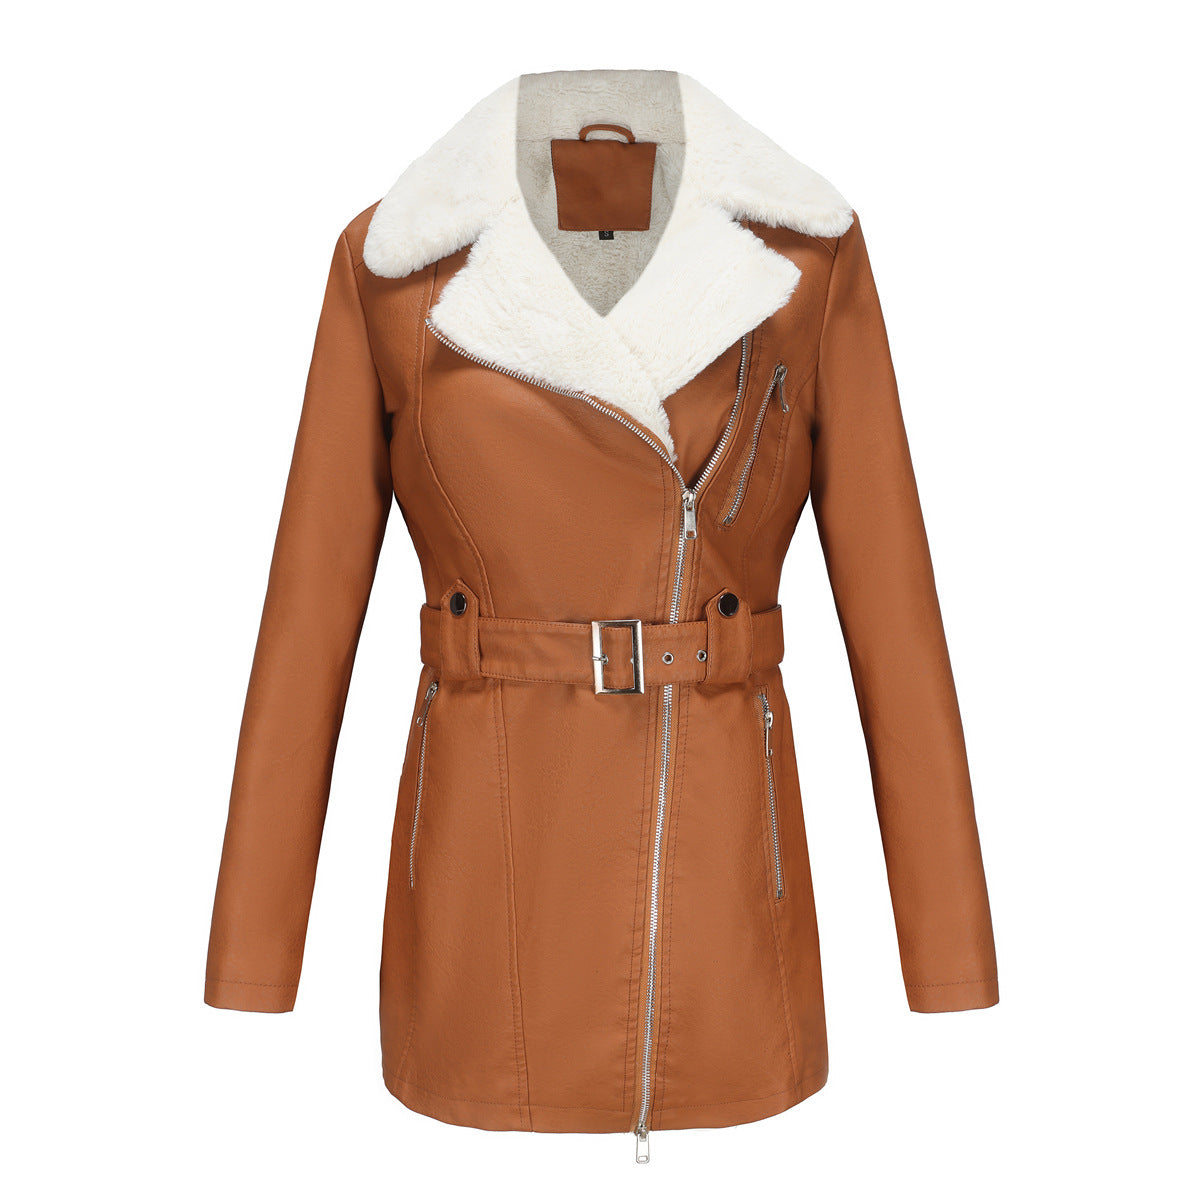 Autumn Winter Long Sleeved Fleece Leather Jacket Women Collared Double Headed Zipper With Belt Warm Coat